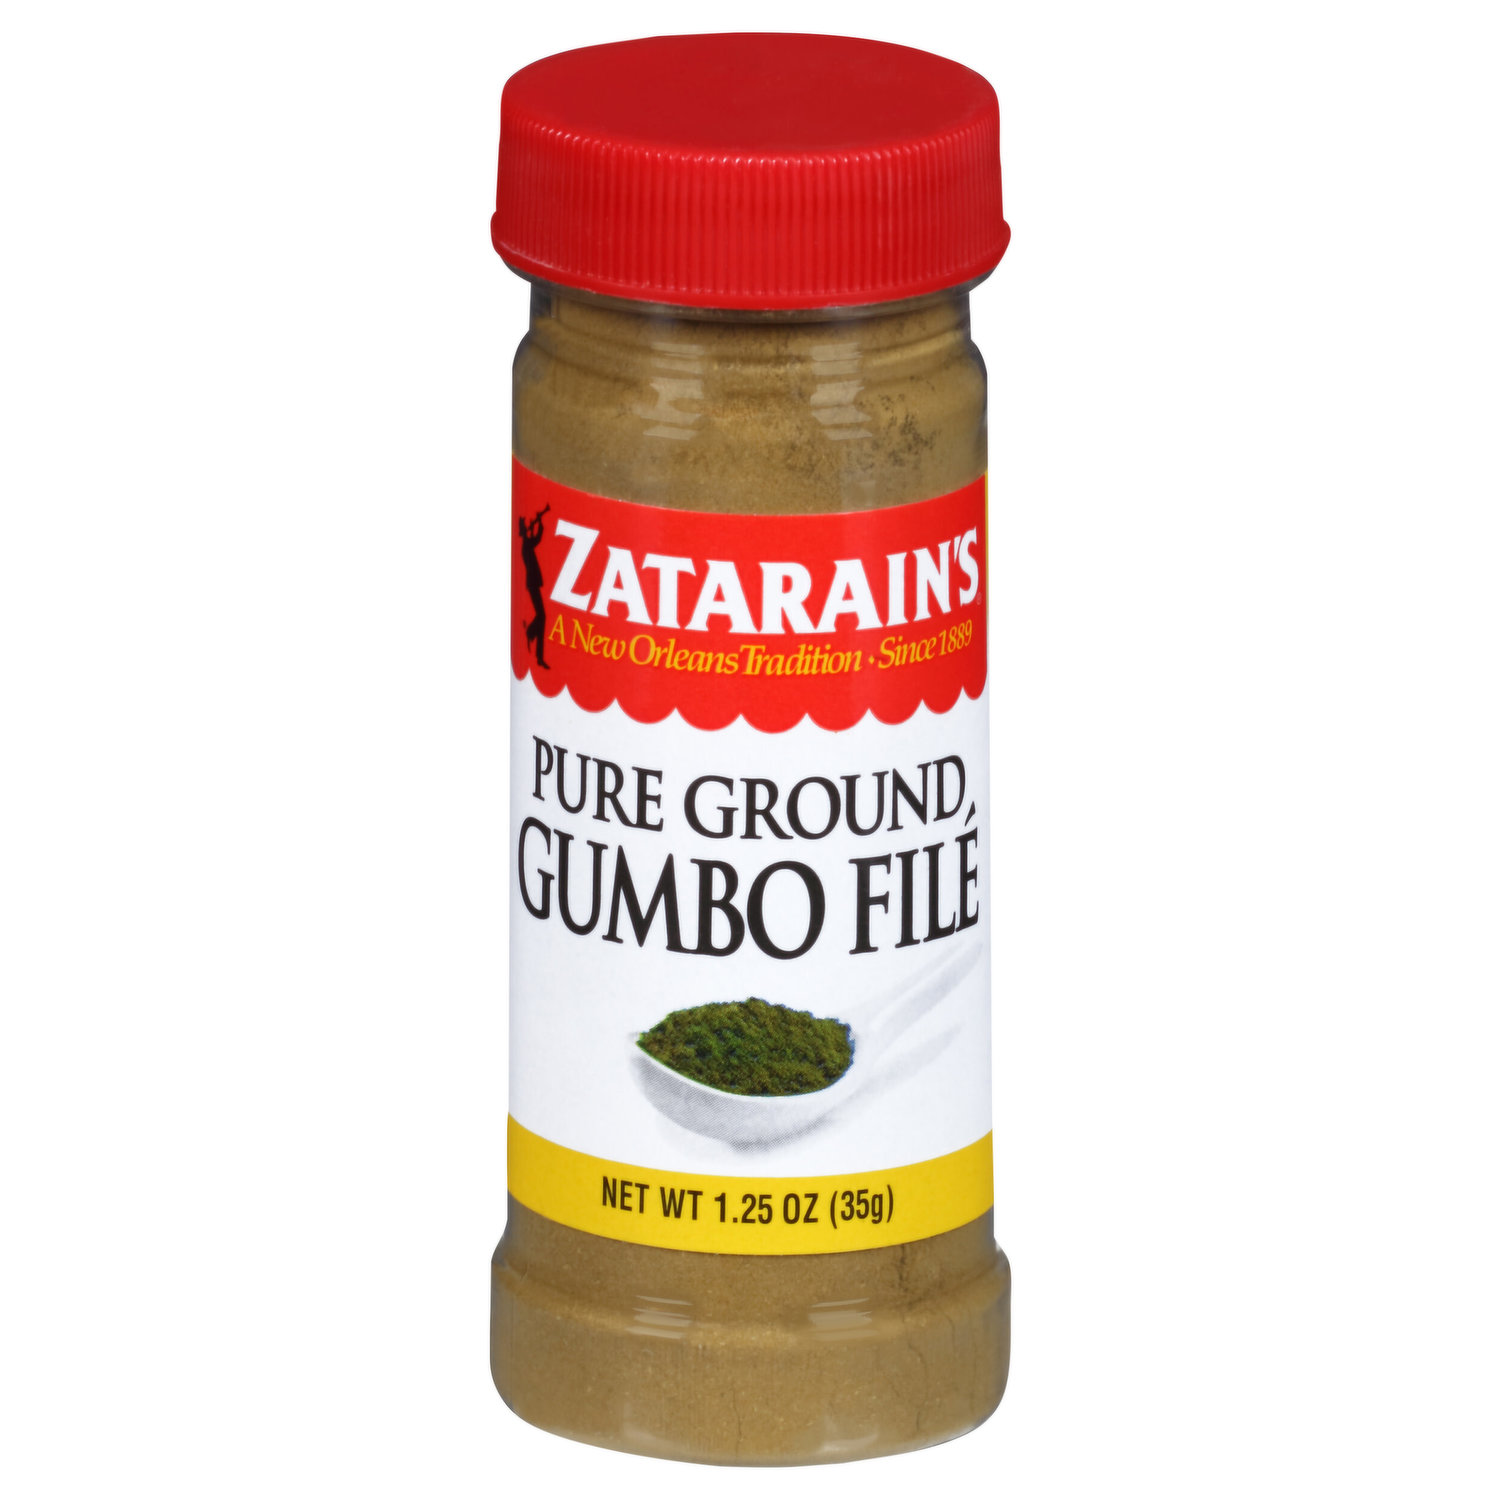 Zatarain's Seasoning - Garlic & Herb, 5.12 oz Mixed Spices